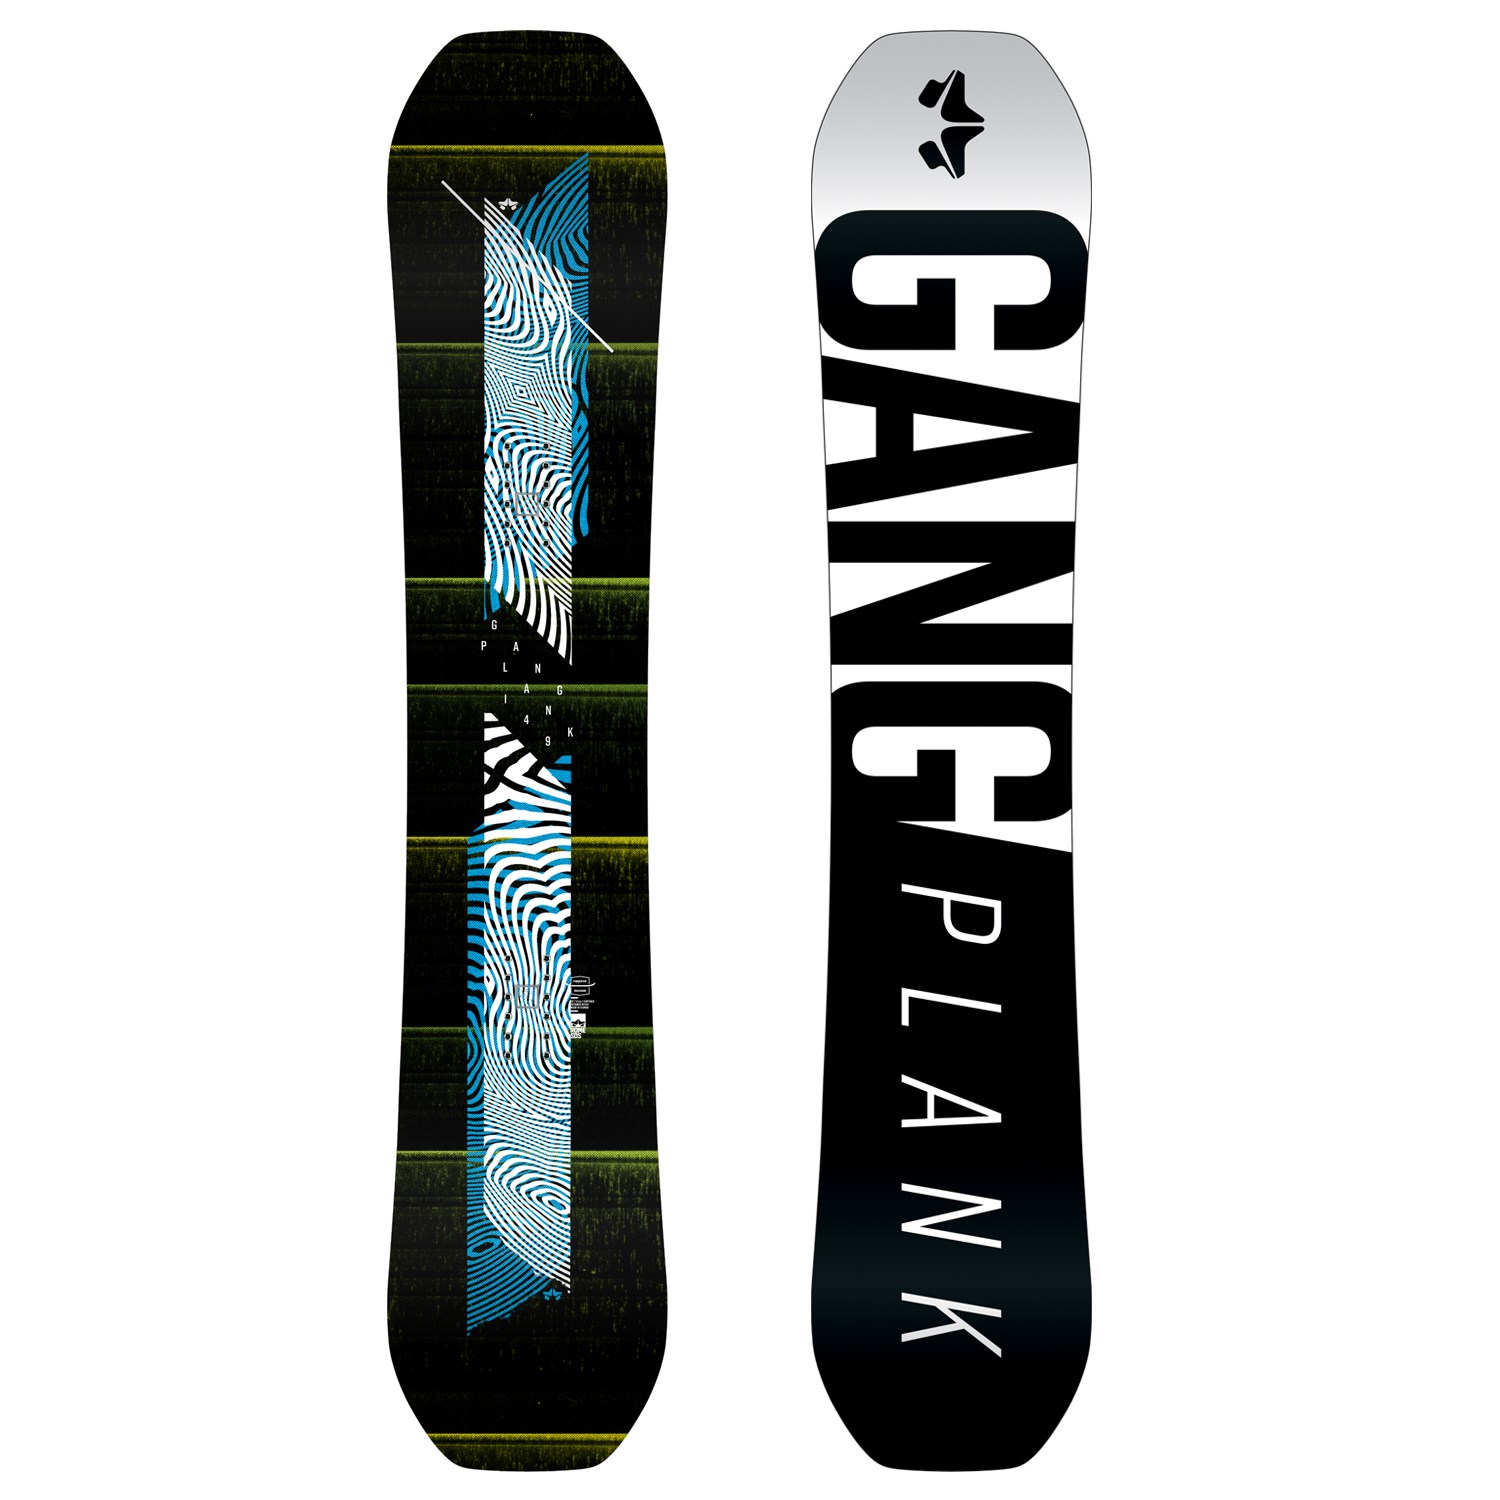 https://images.evo.com/imgp/zoom/122398/512937/rome-gang-plank-snowboard-2018-.jpg